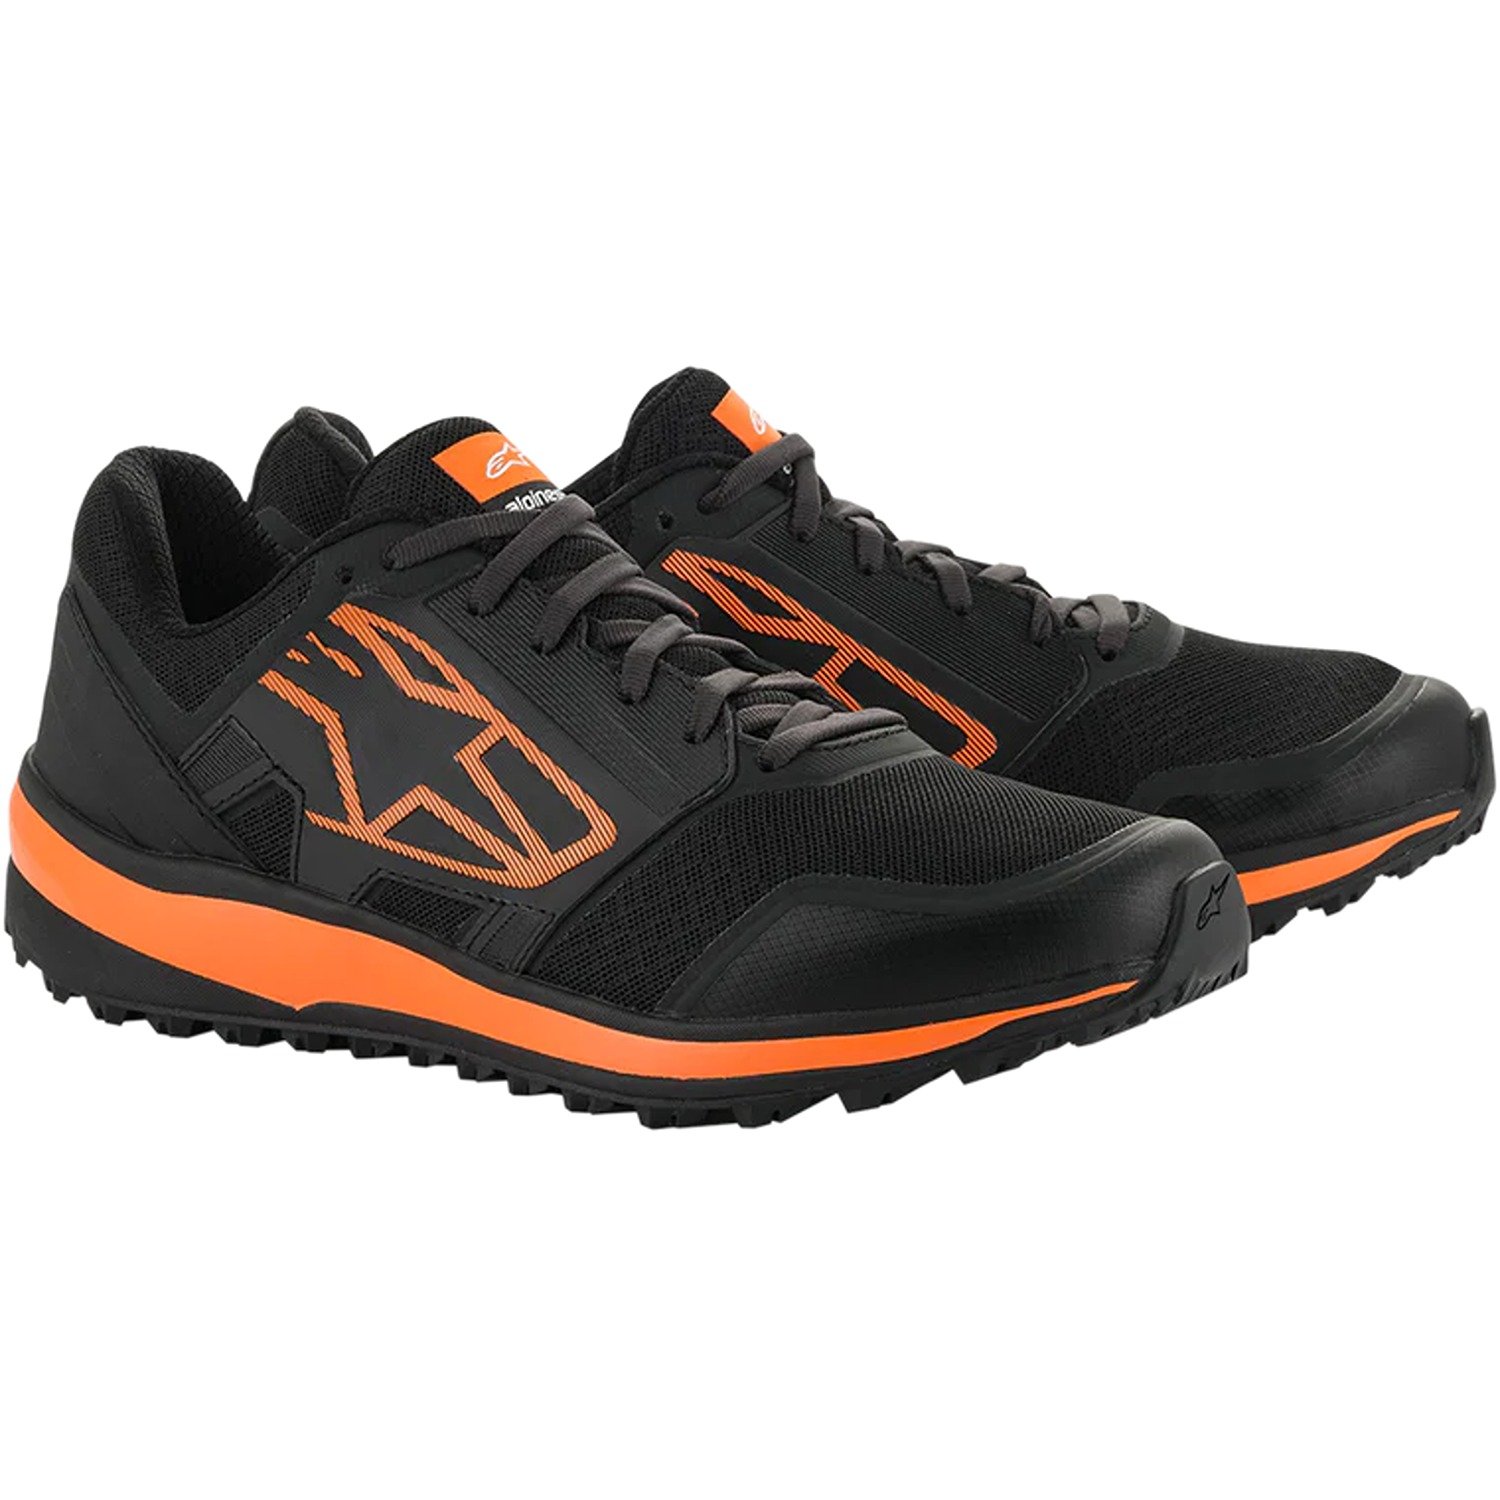 Image of Alpinestars Meta Trail Shoes Black Orange Size US 11 ID 8059175092015